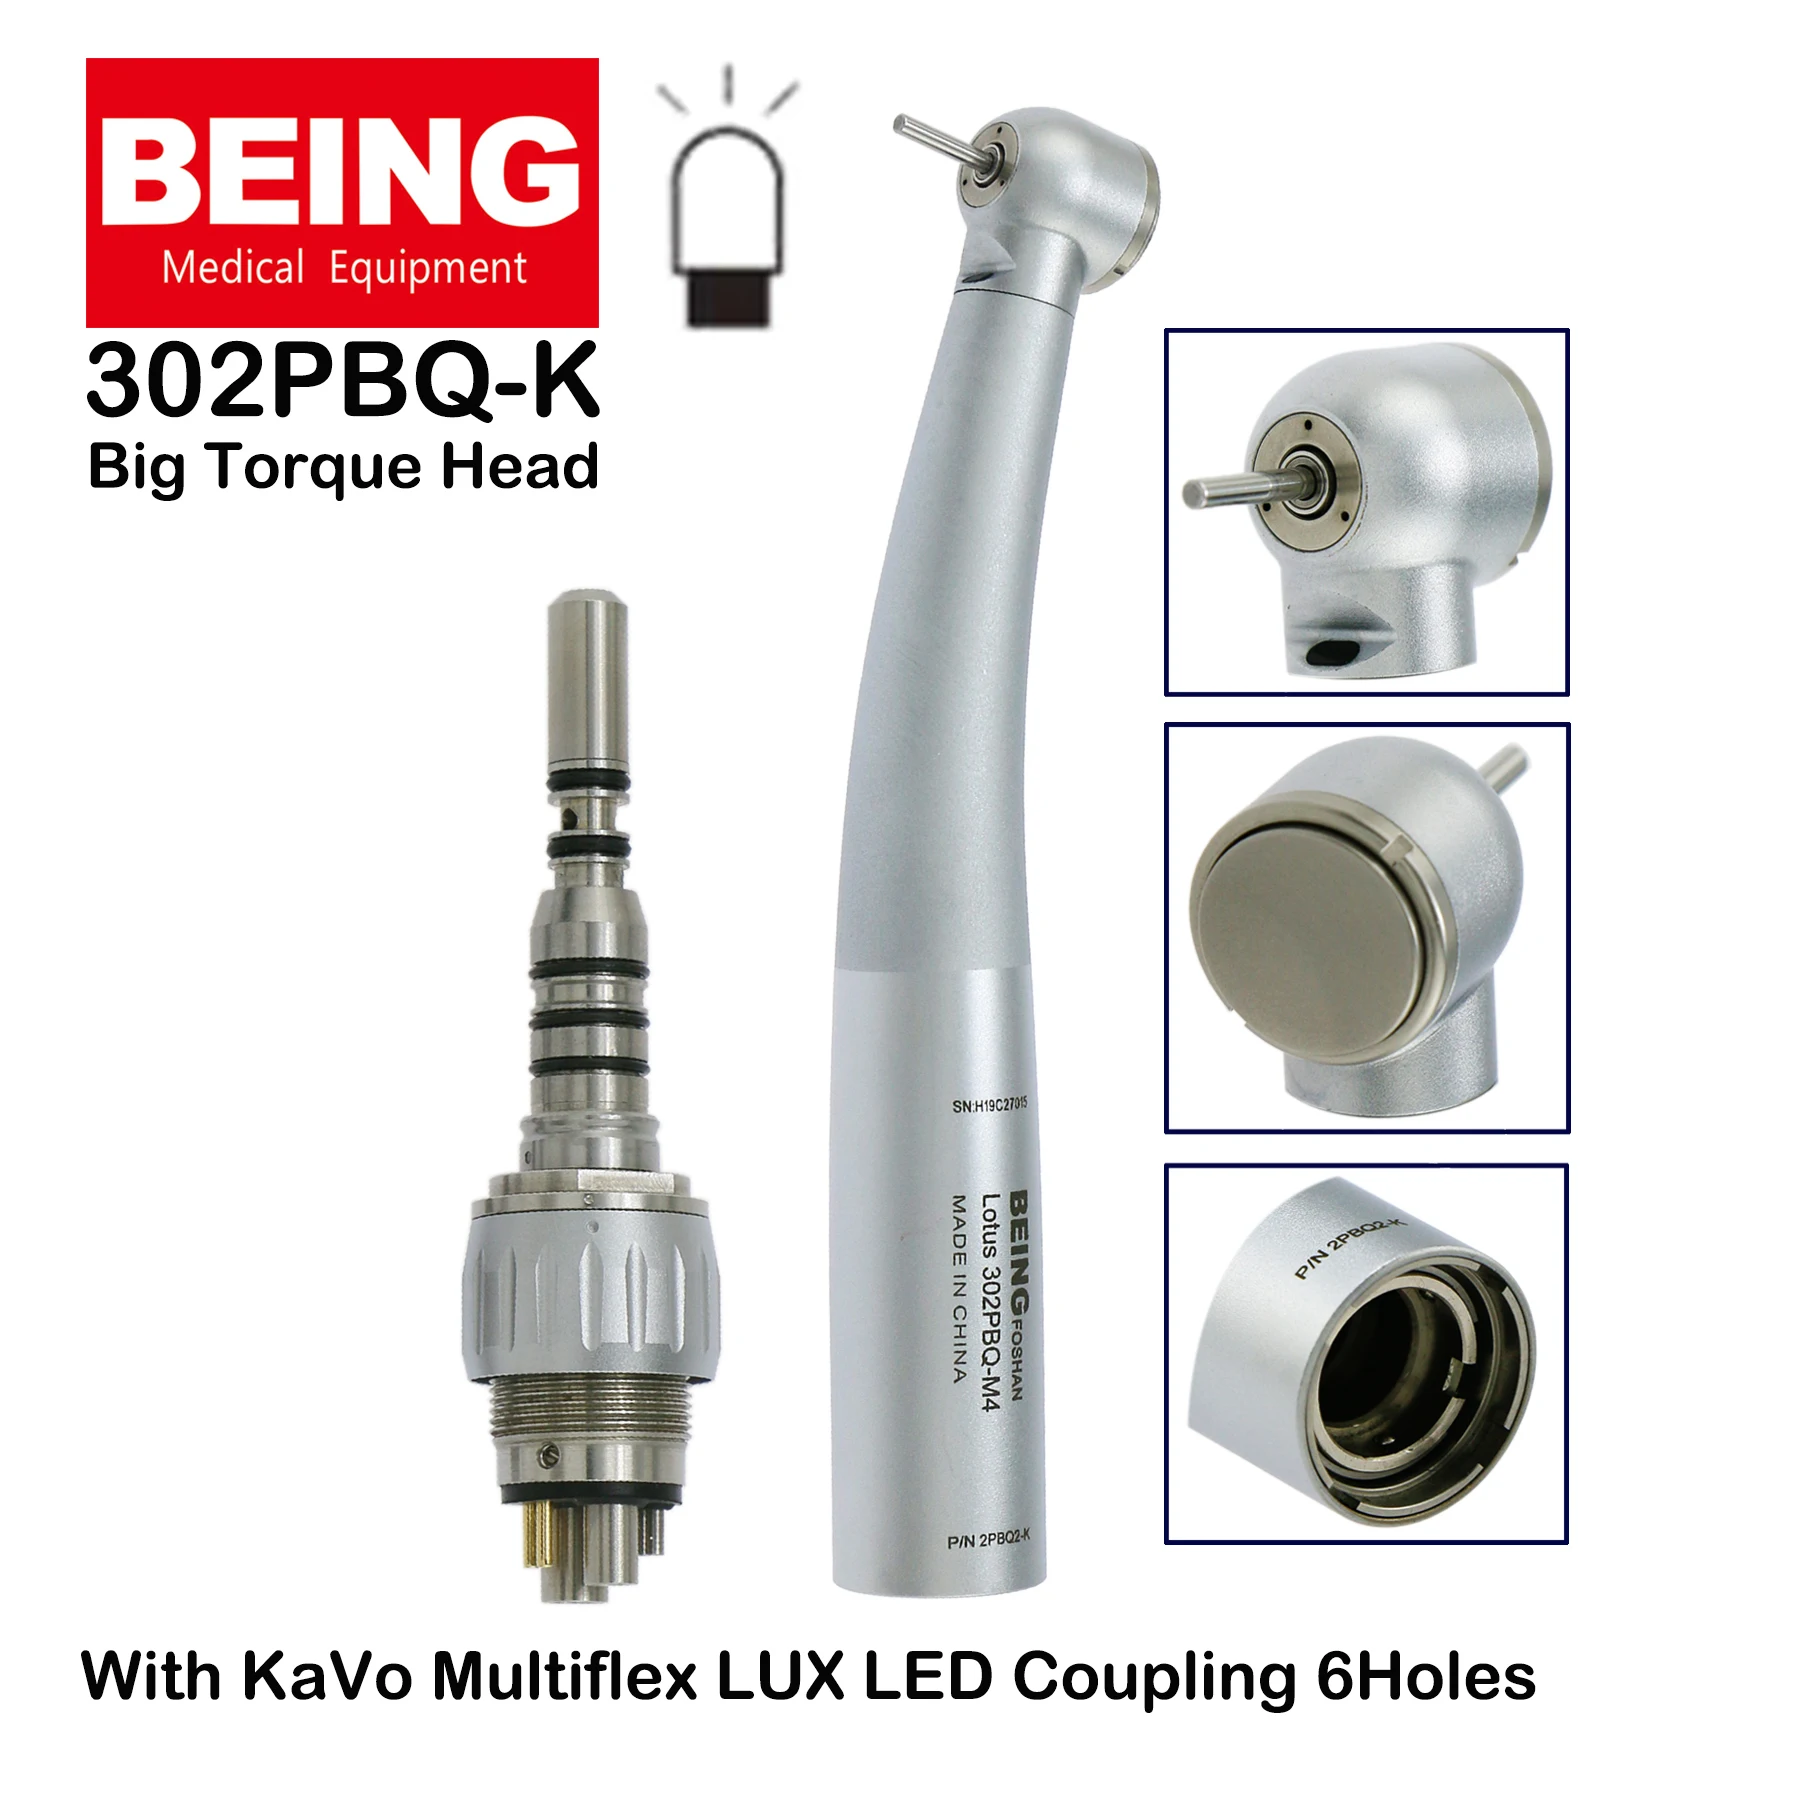 BEING Dental LED Fiber Optic High Speed Air Turbine Big Torque Handpiece 302PBQ-K With KAVO MULTIflex LUX Coupling 6Holes 6Pin